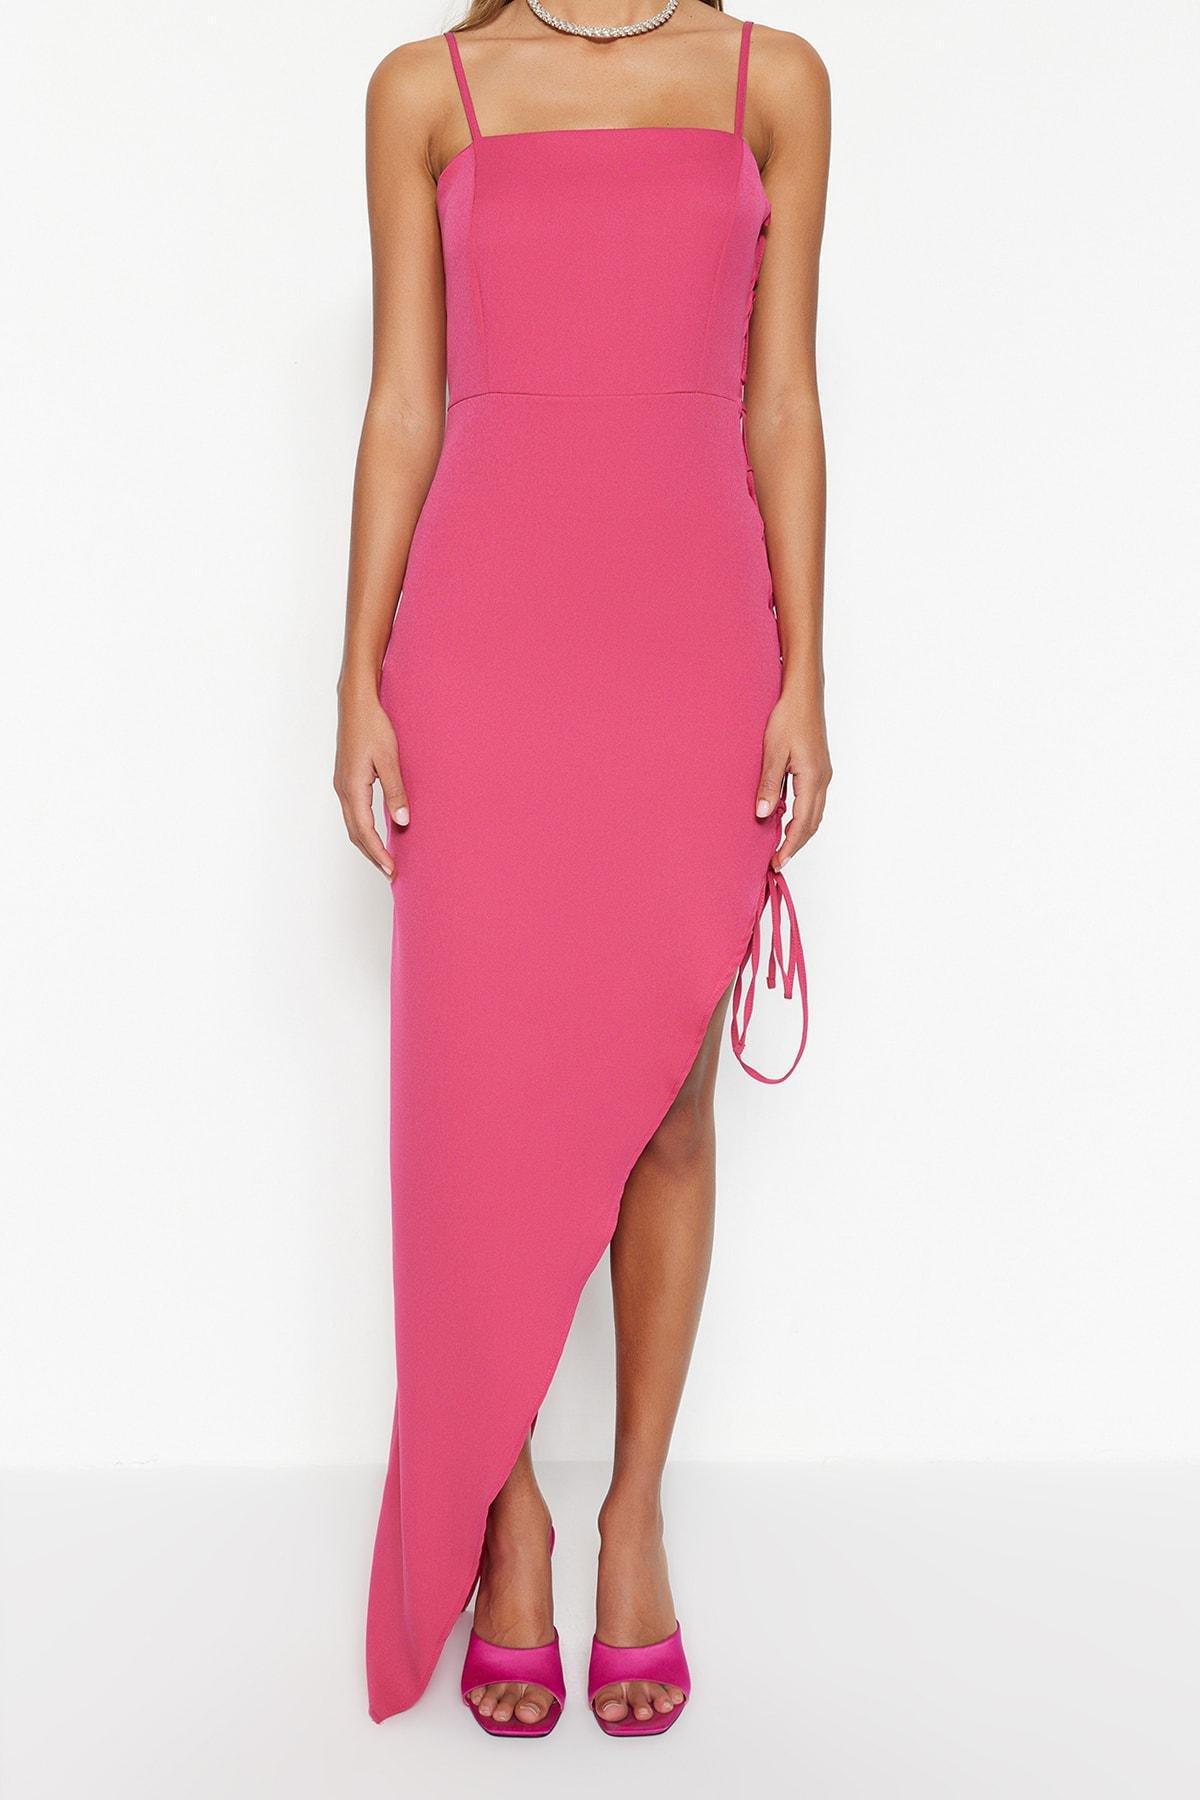 Trendyol - Pink Shift Occasionwear Dress